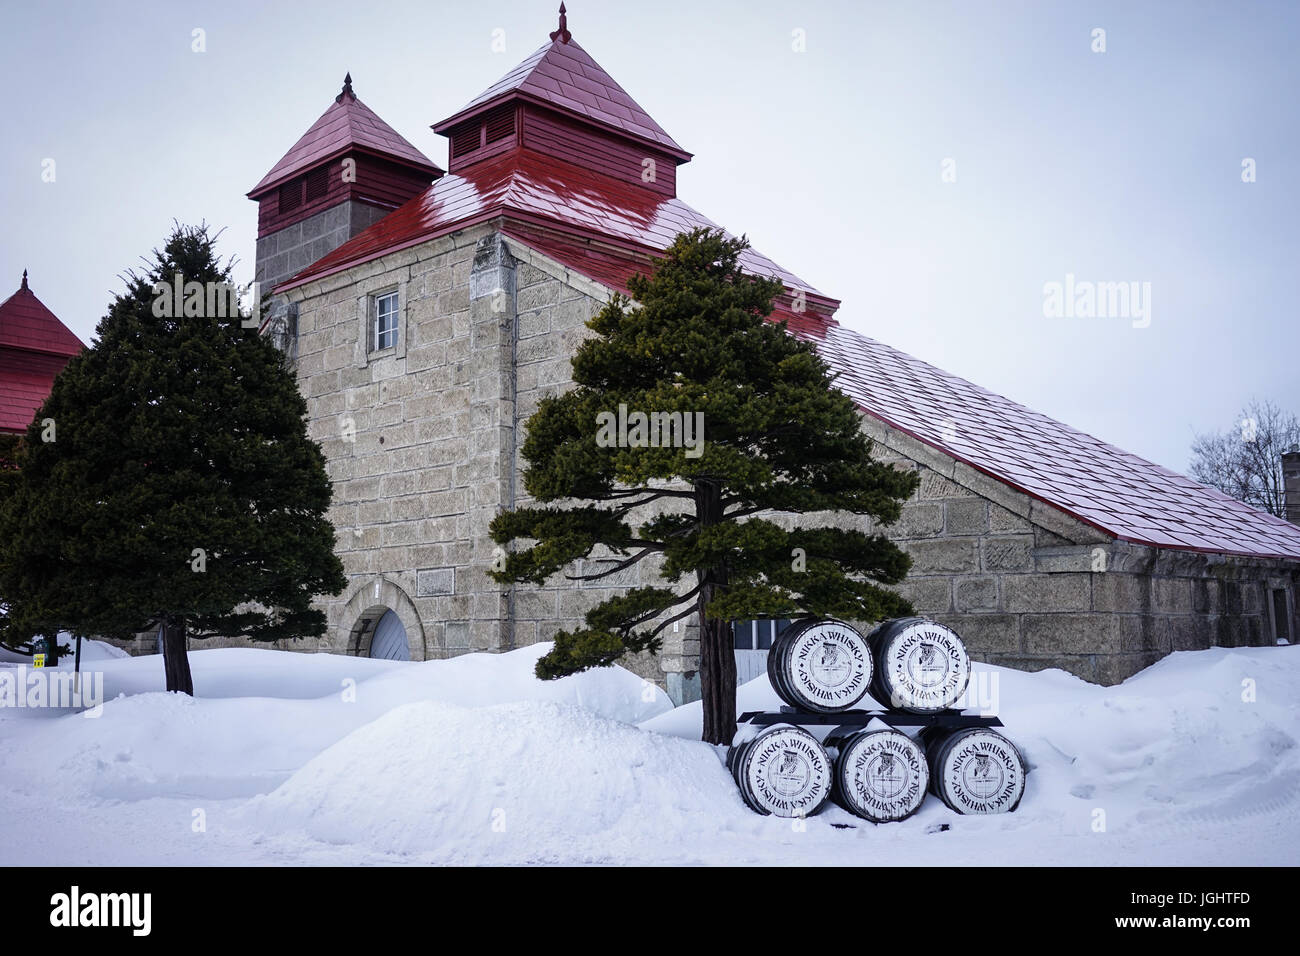 Yoichi, Japan - Feb 4, 2015. Yoichi Distillery at winter with snow in Hokkaido, Japan. Yoichi Distillery is owned by Nikka Whisky Distilling, and was  Stock Photo